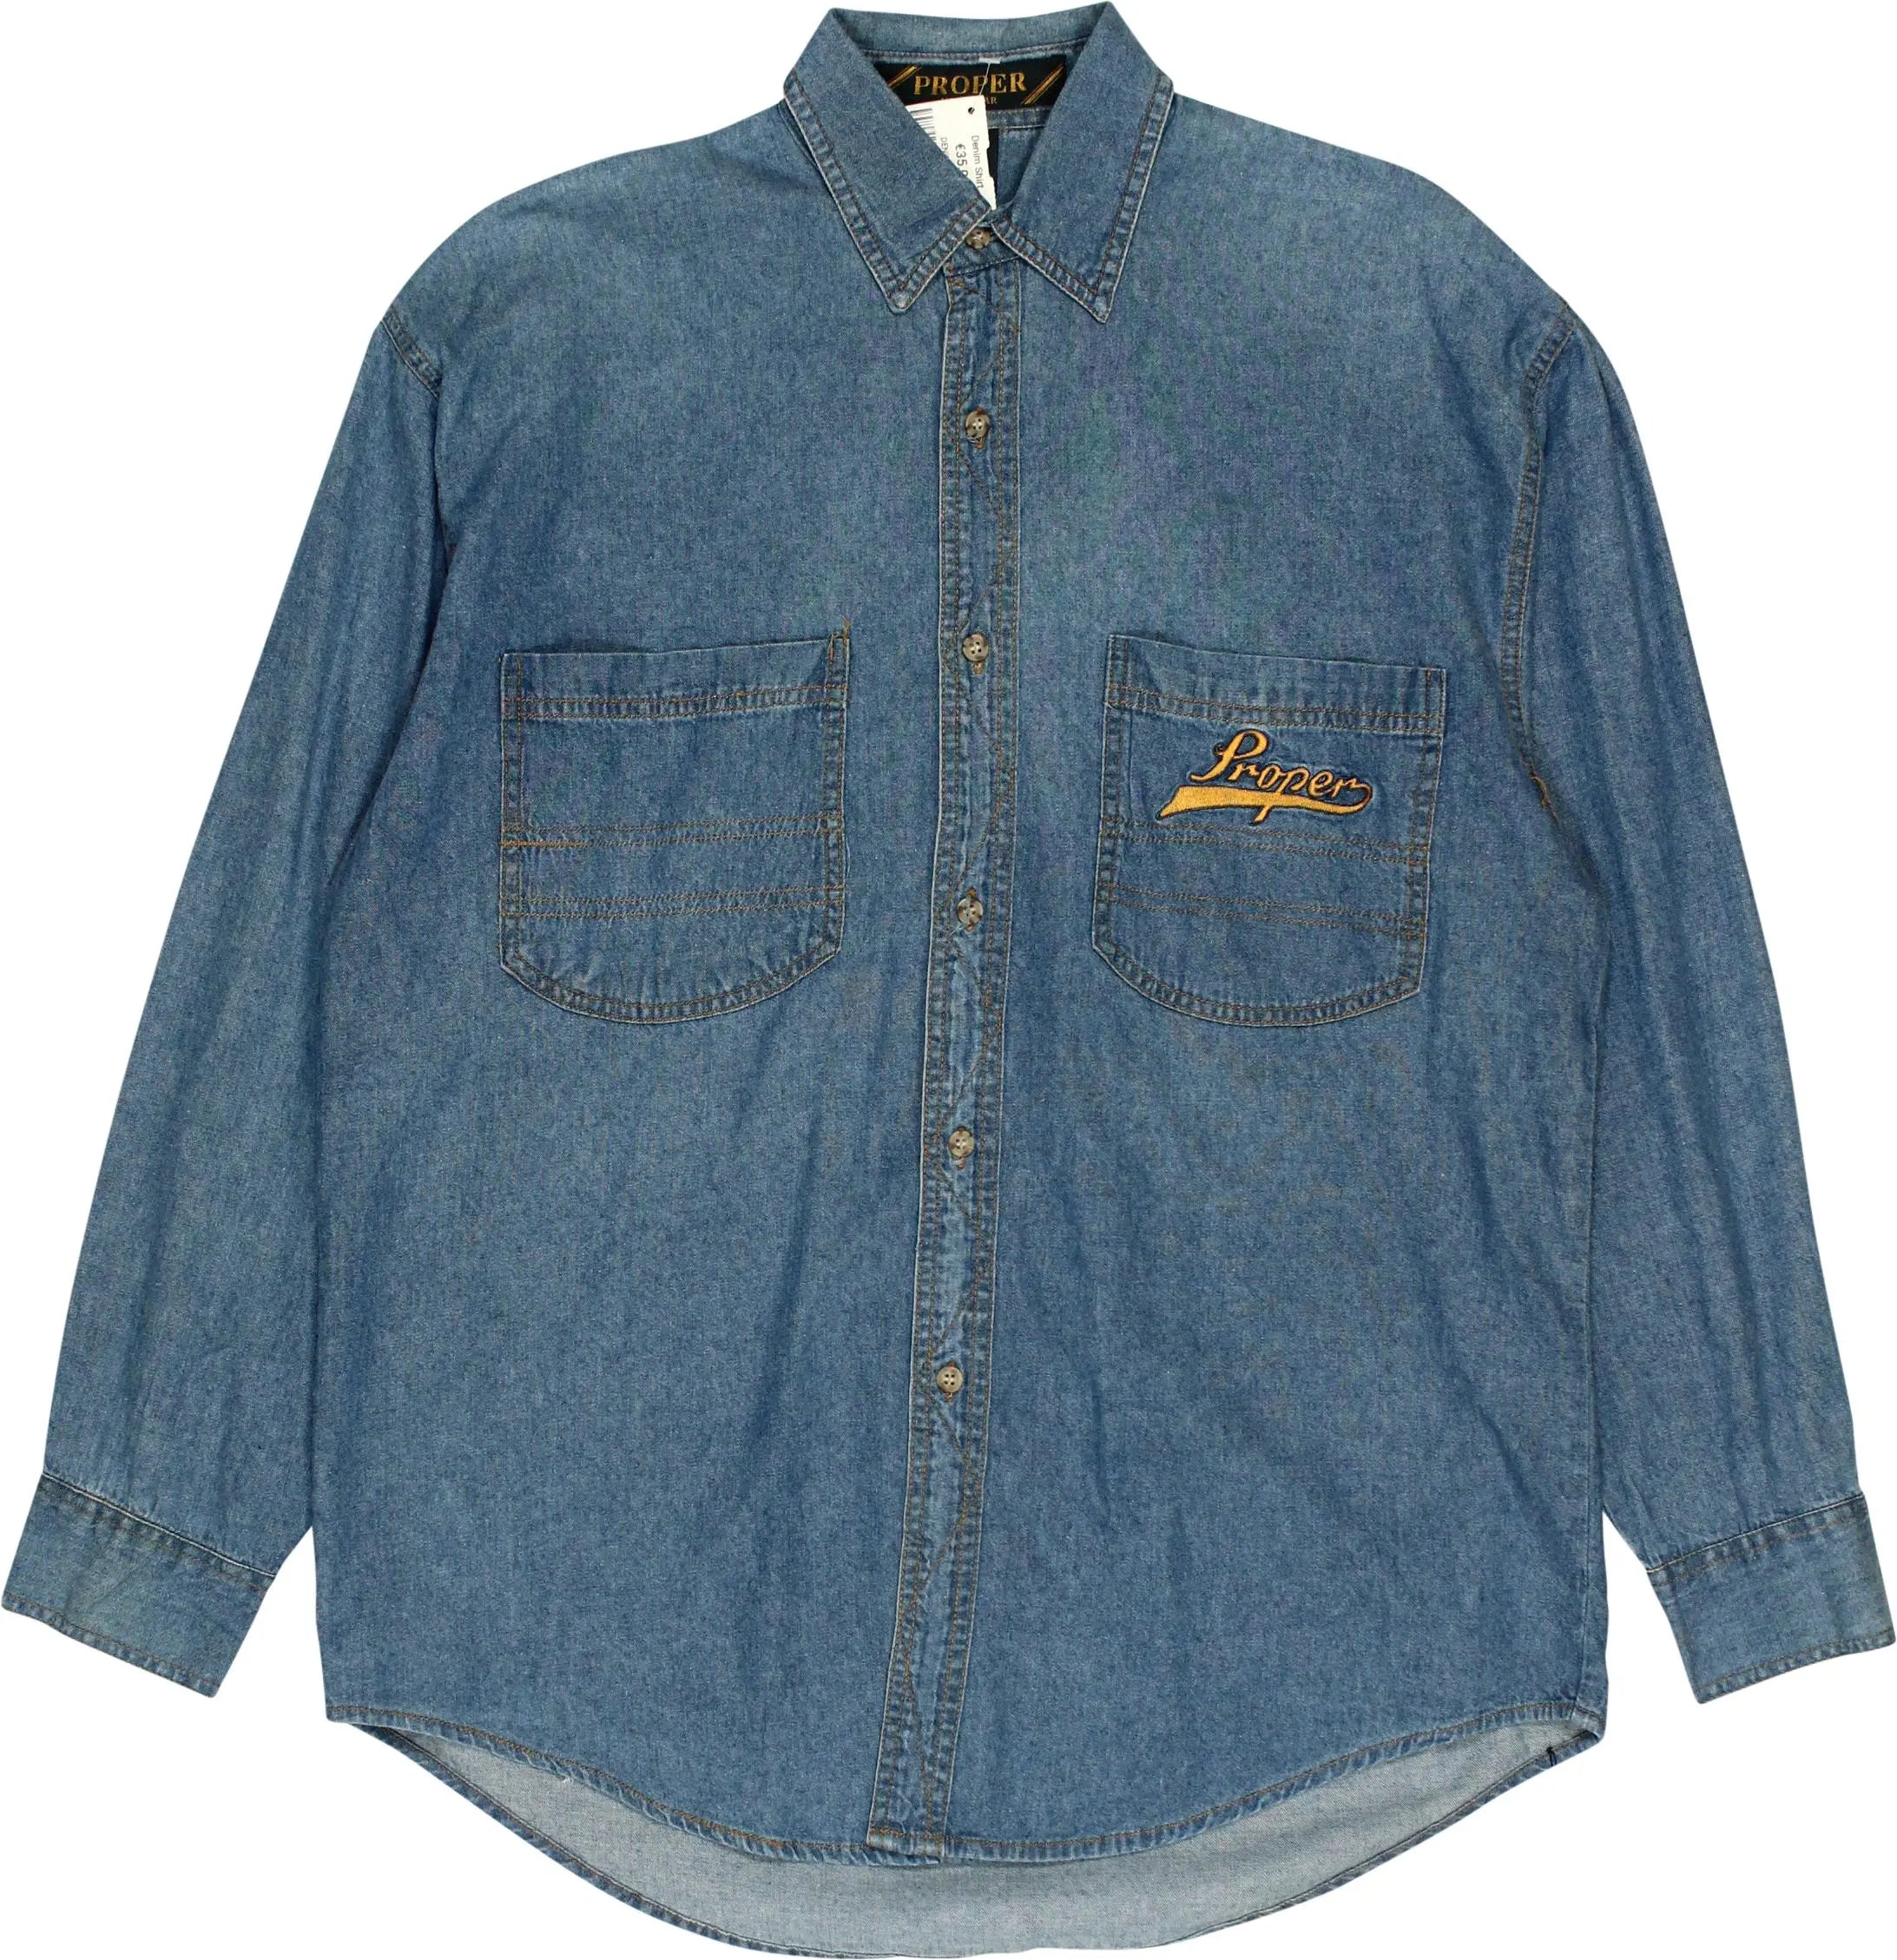 Proper - Denim Shirt- ThriftTale.com - Vintage and second handclothing